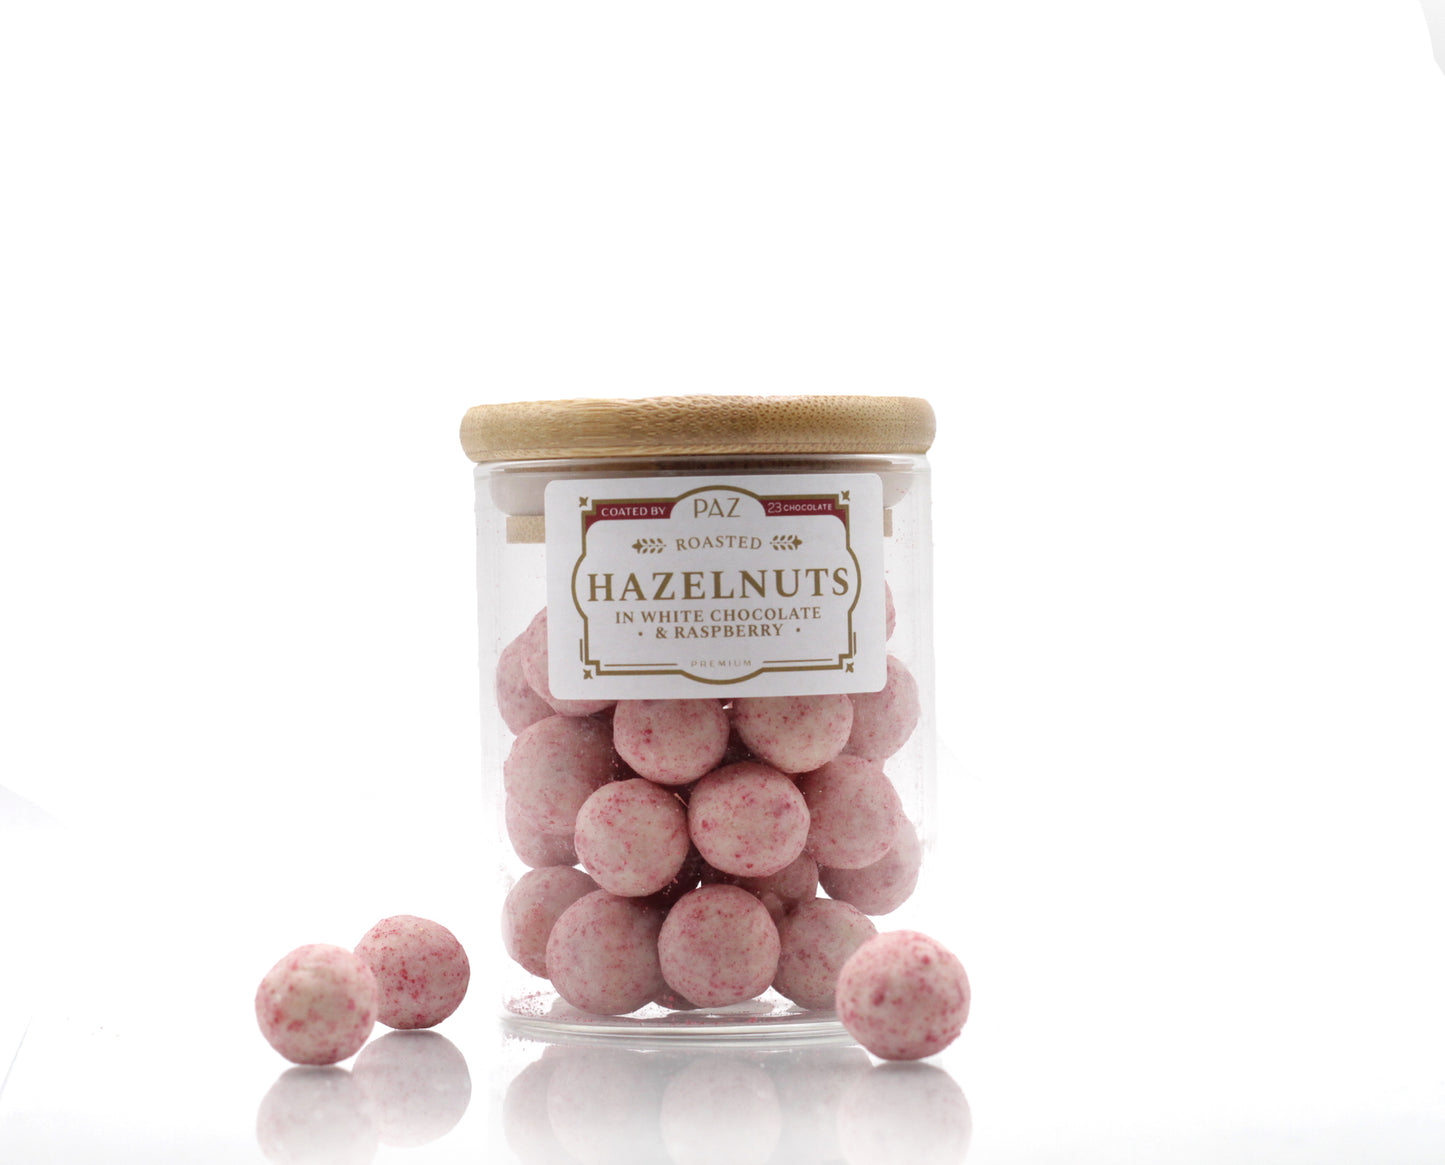 Hazelnuts coated in White Chocolate & Raspberry